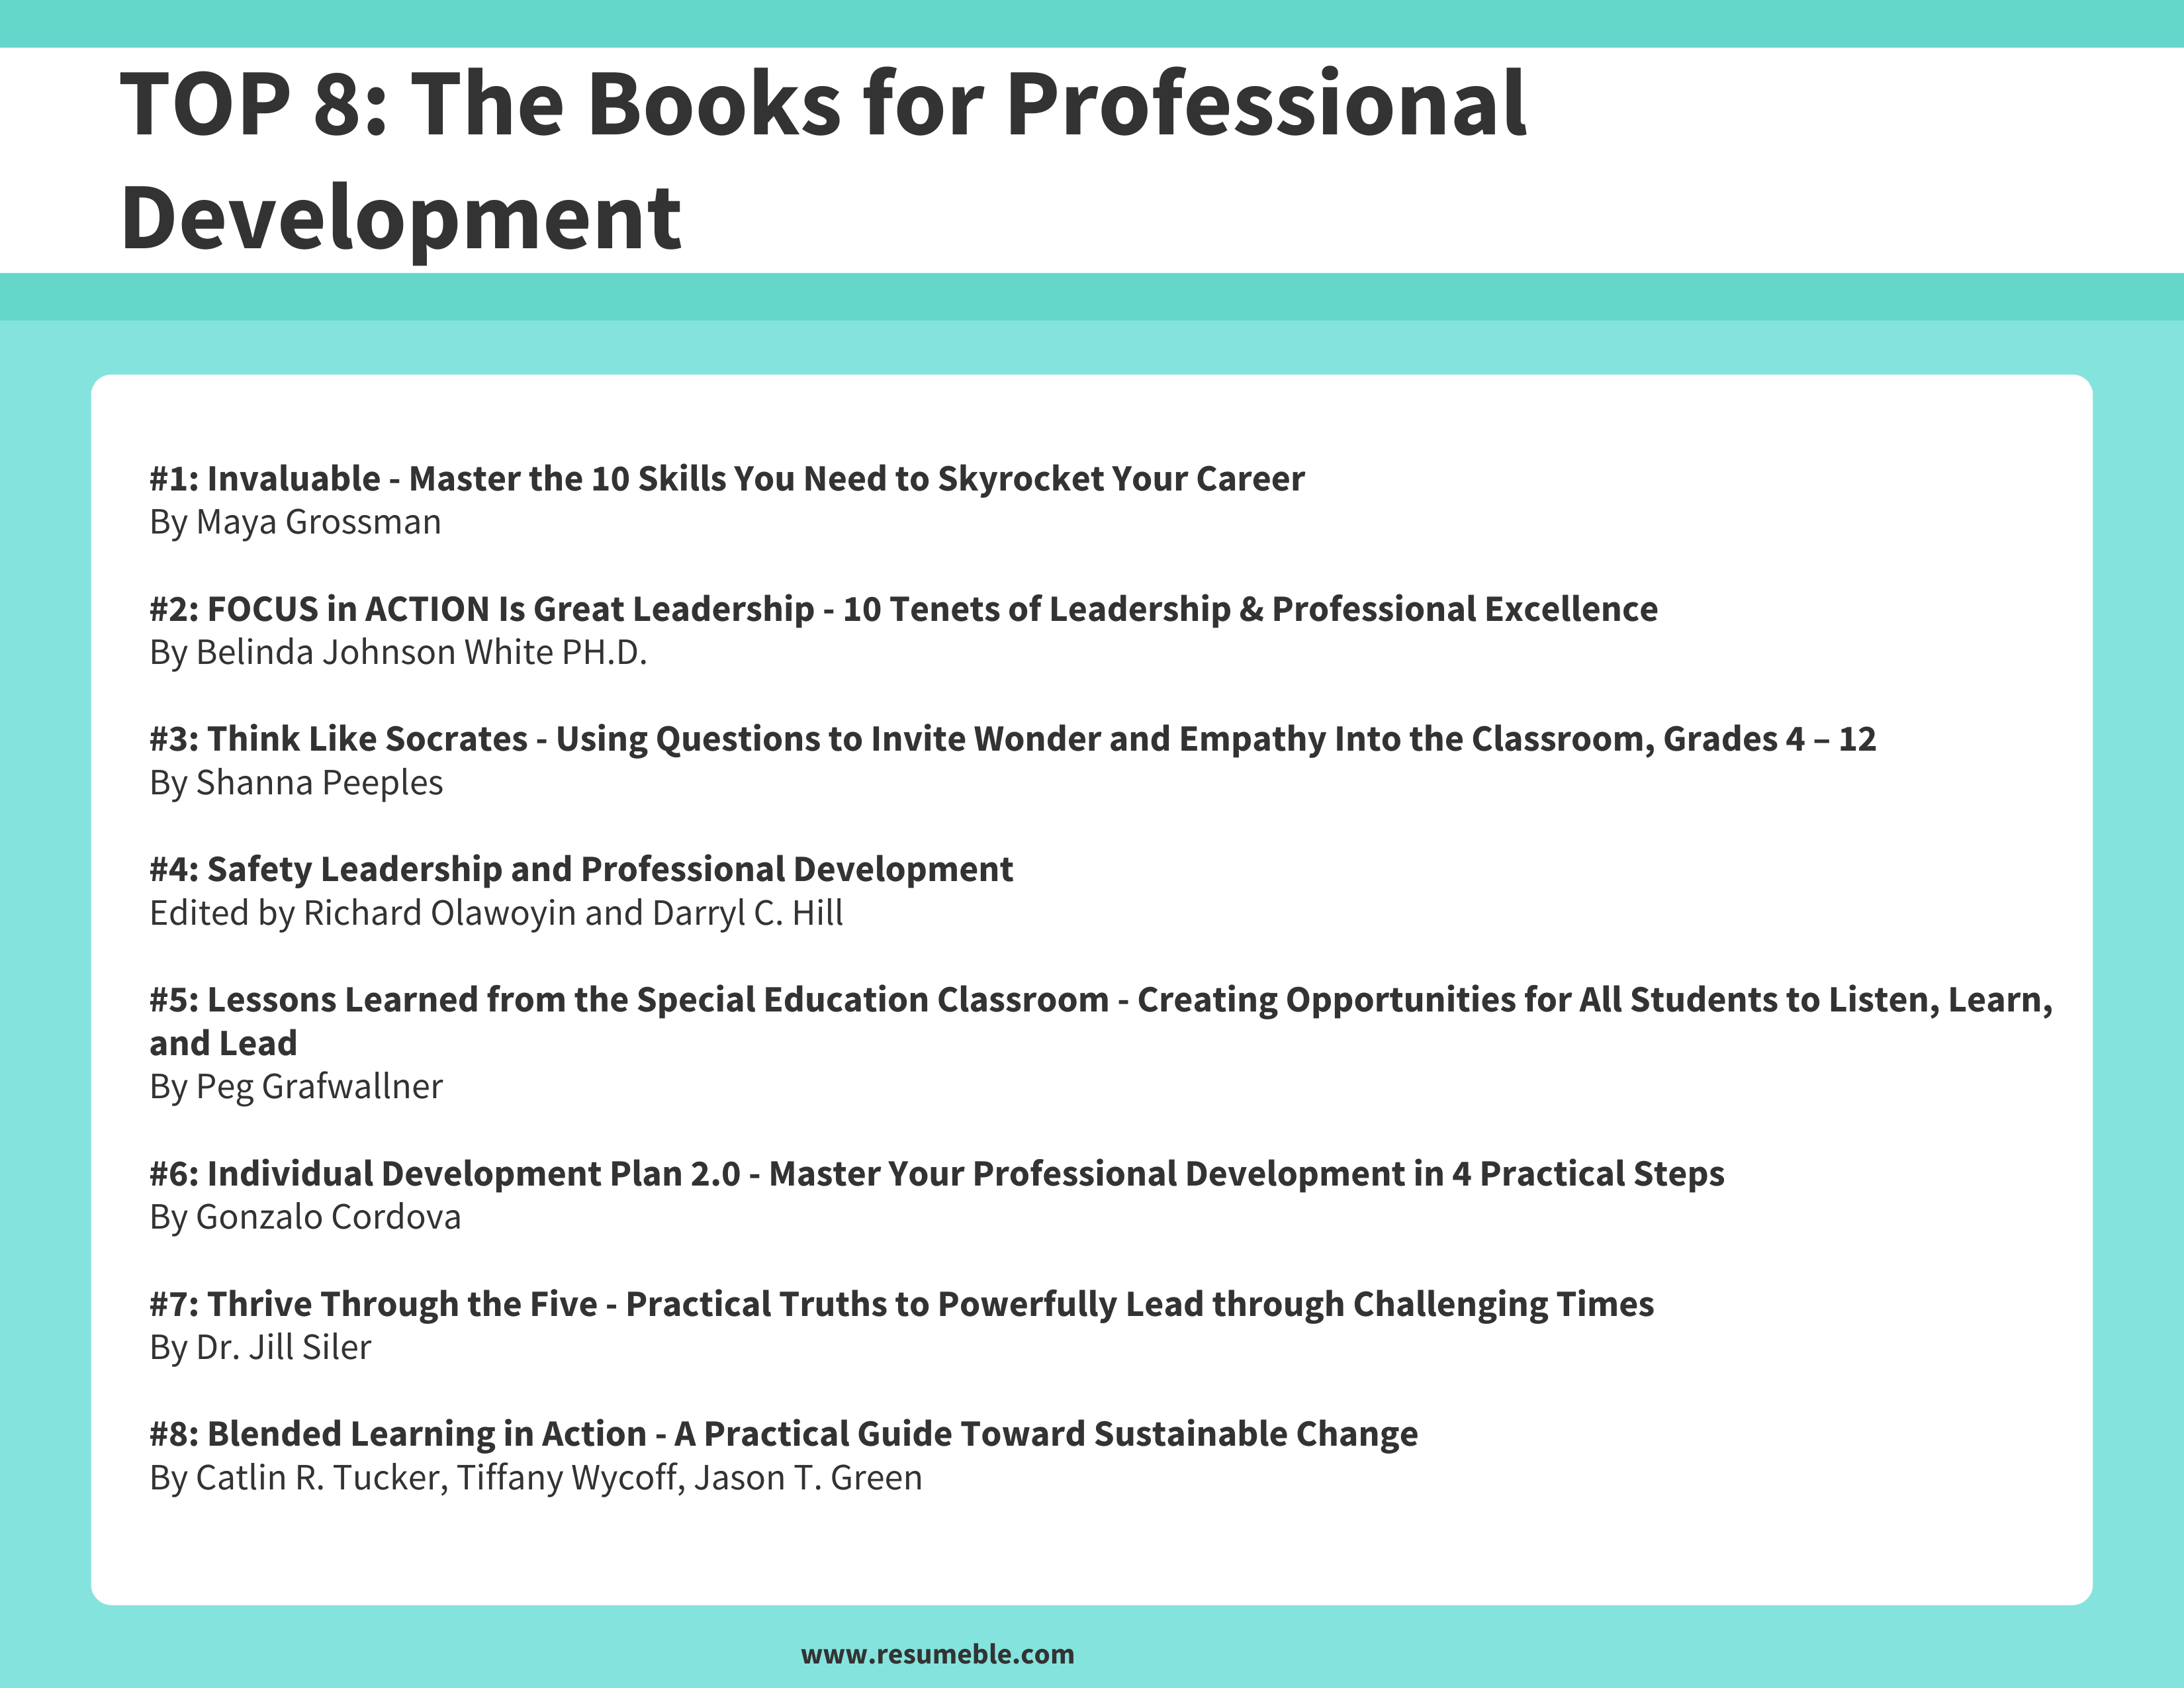 Books for Professional Development